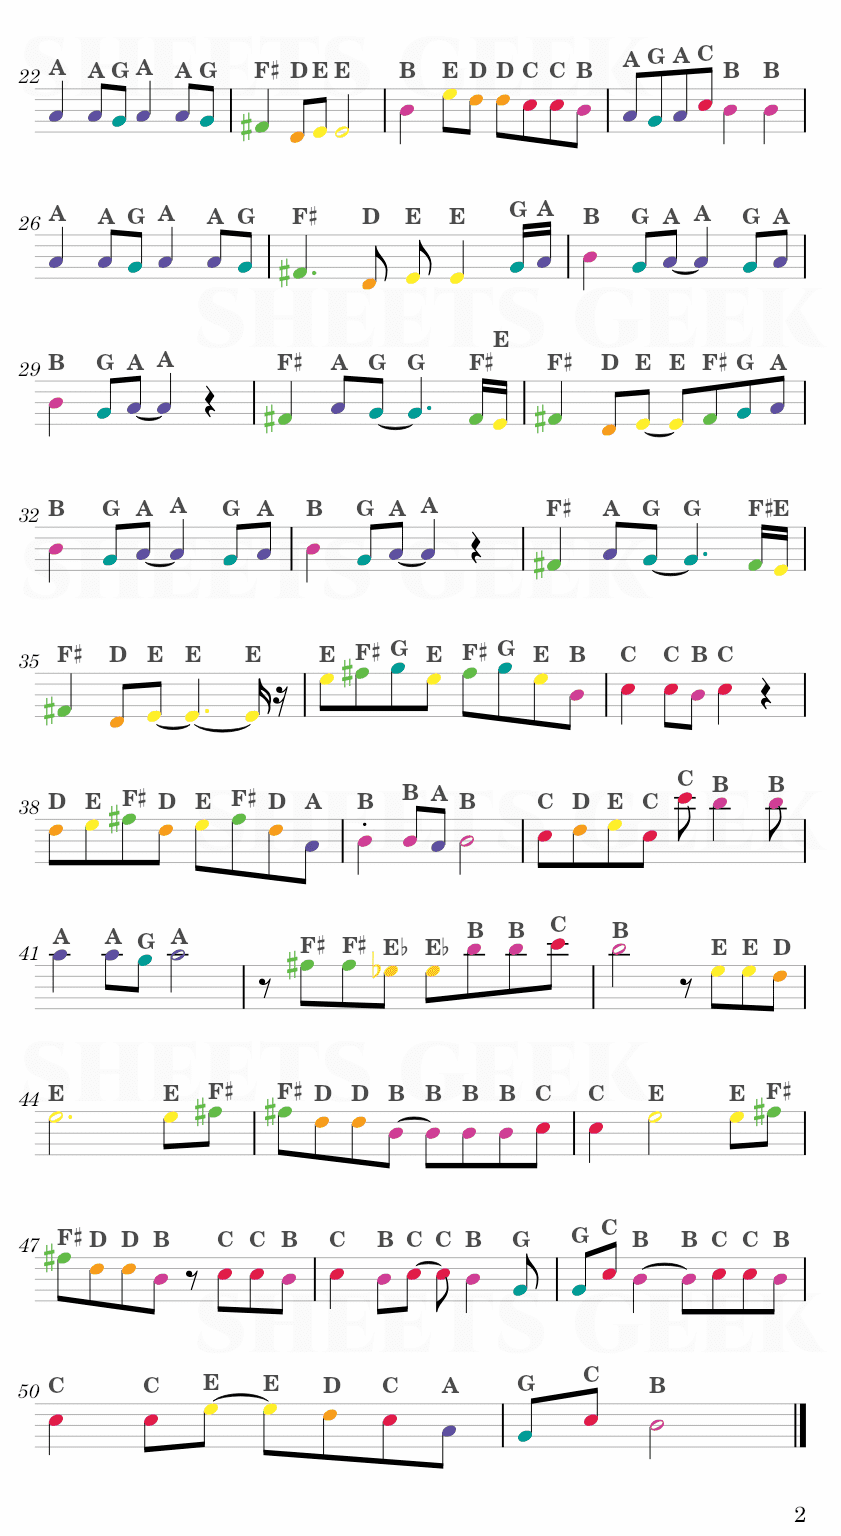 Tum Hi Ho - Aashiqui 2 Easy Sheet Music Free for piano, keyboard, flute, violin, sax, cello page 2